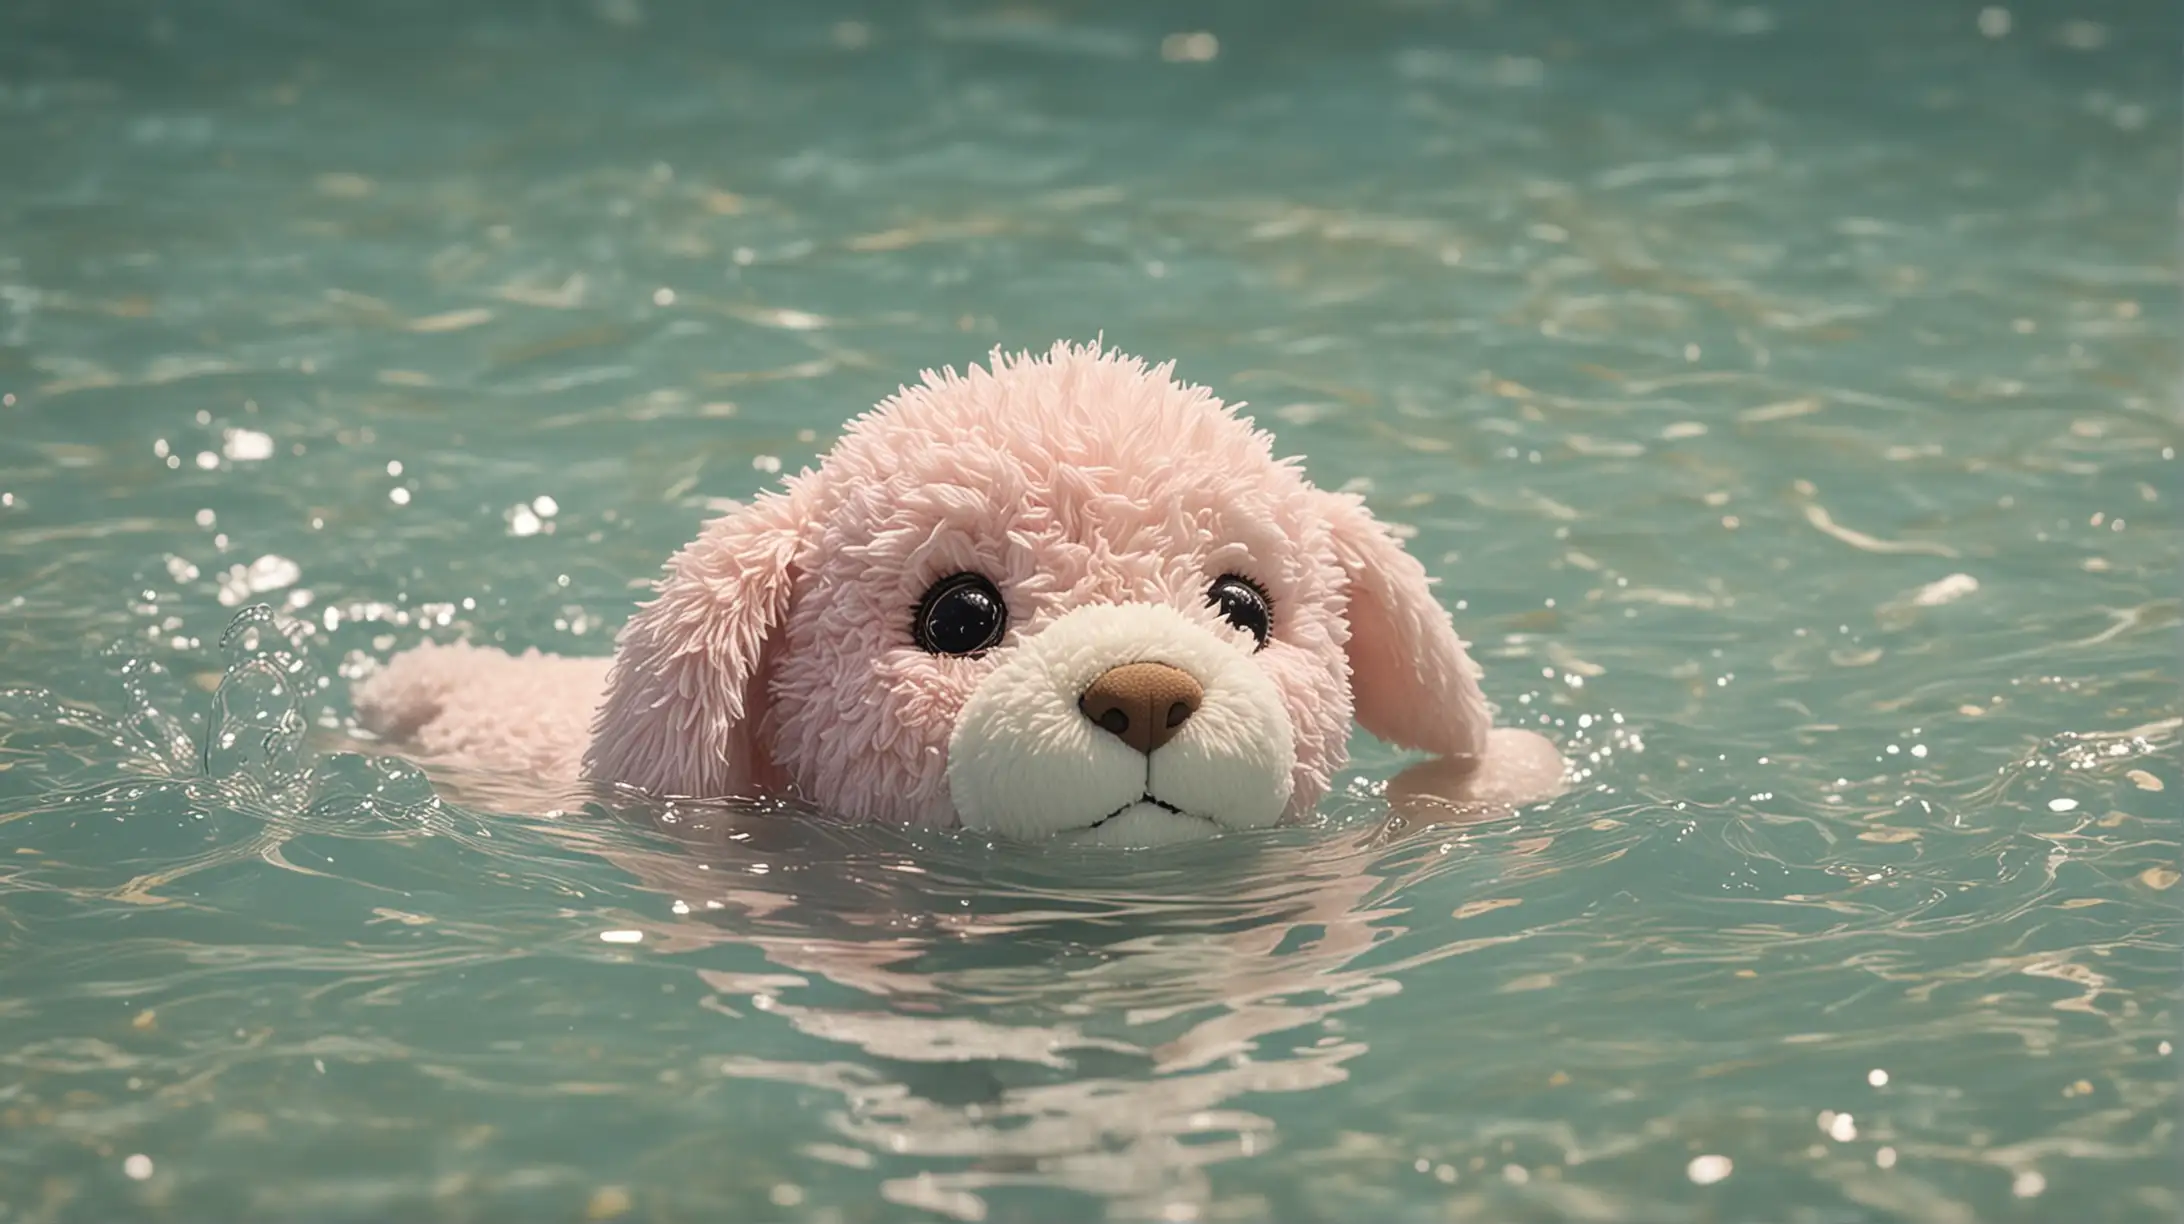 A stuffed animal swimming in water, pastel